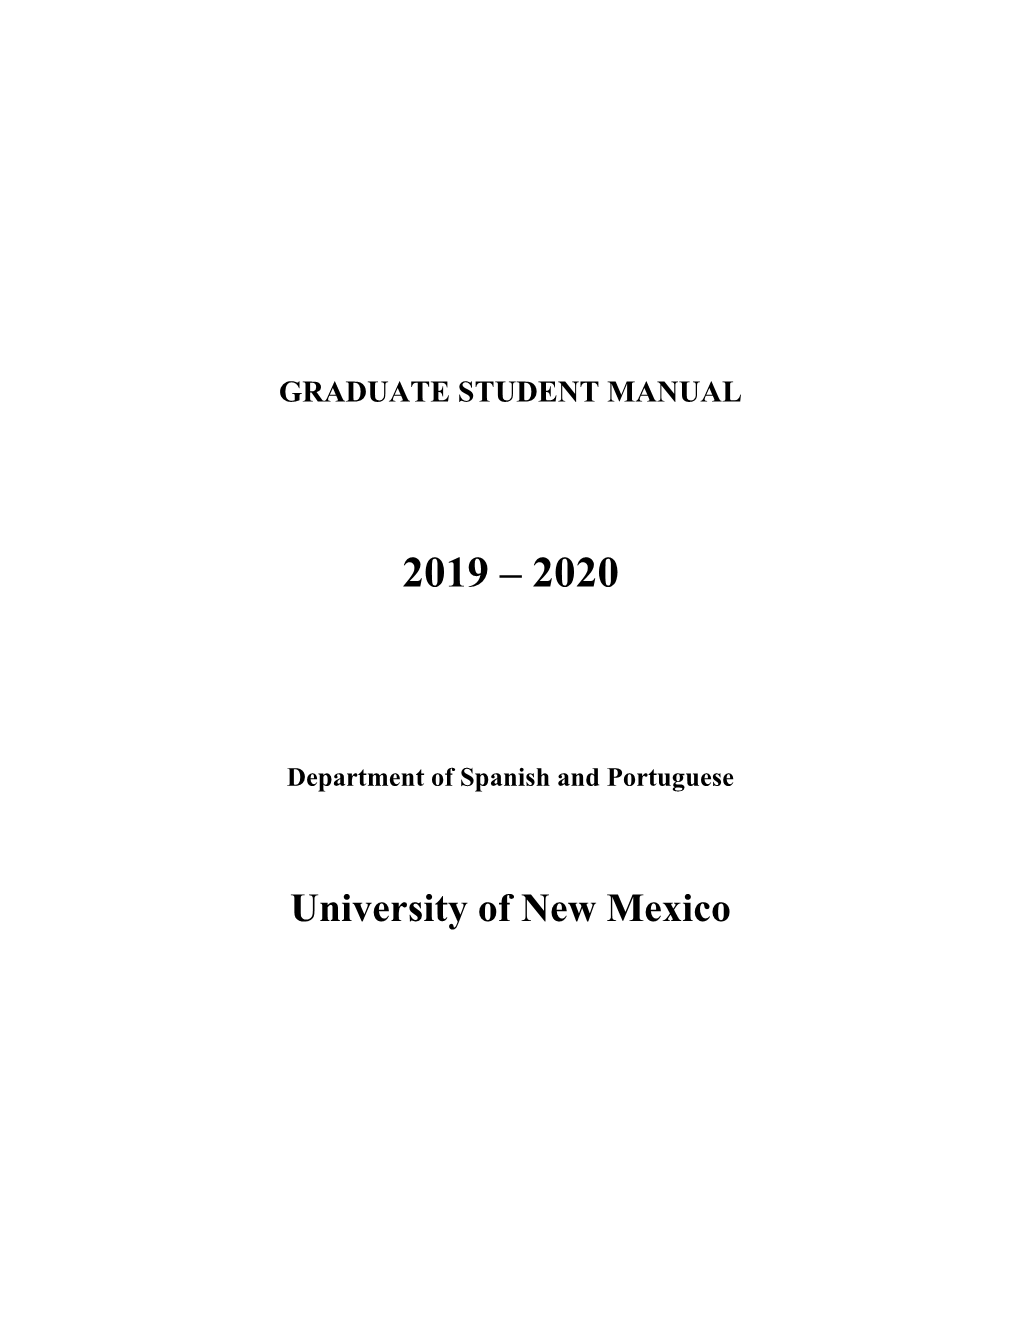 Graduate Student Manual